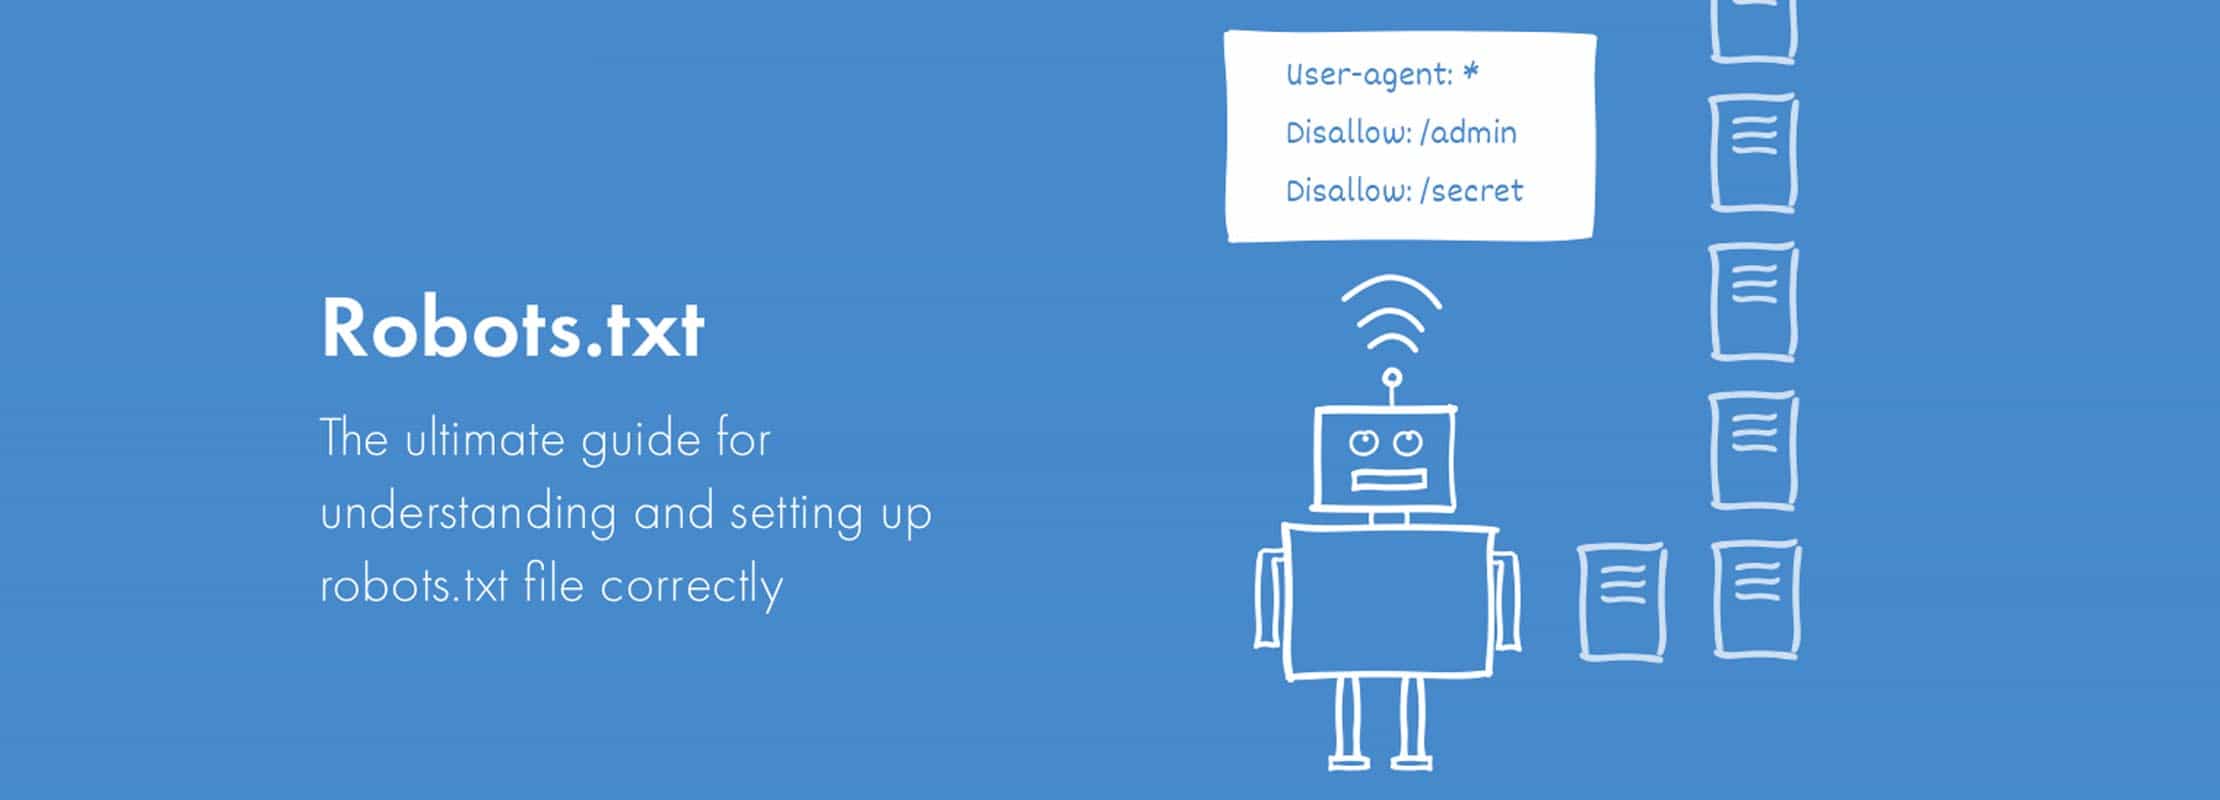 robots.txt heading|a robot|codes of robot.txt for SEO|web design company in kerala 